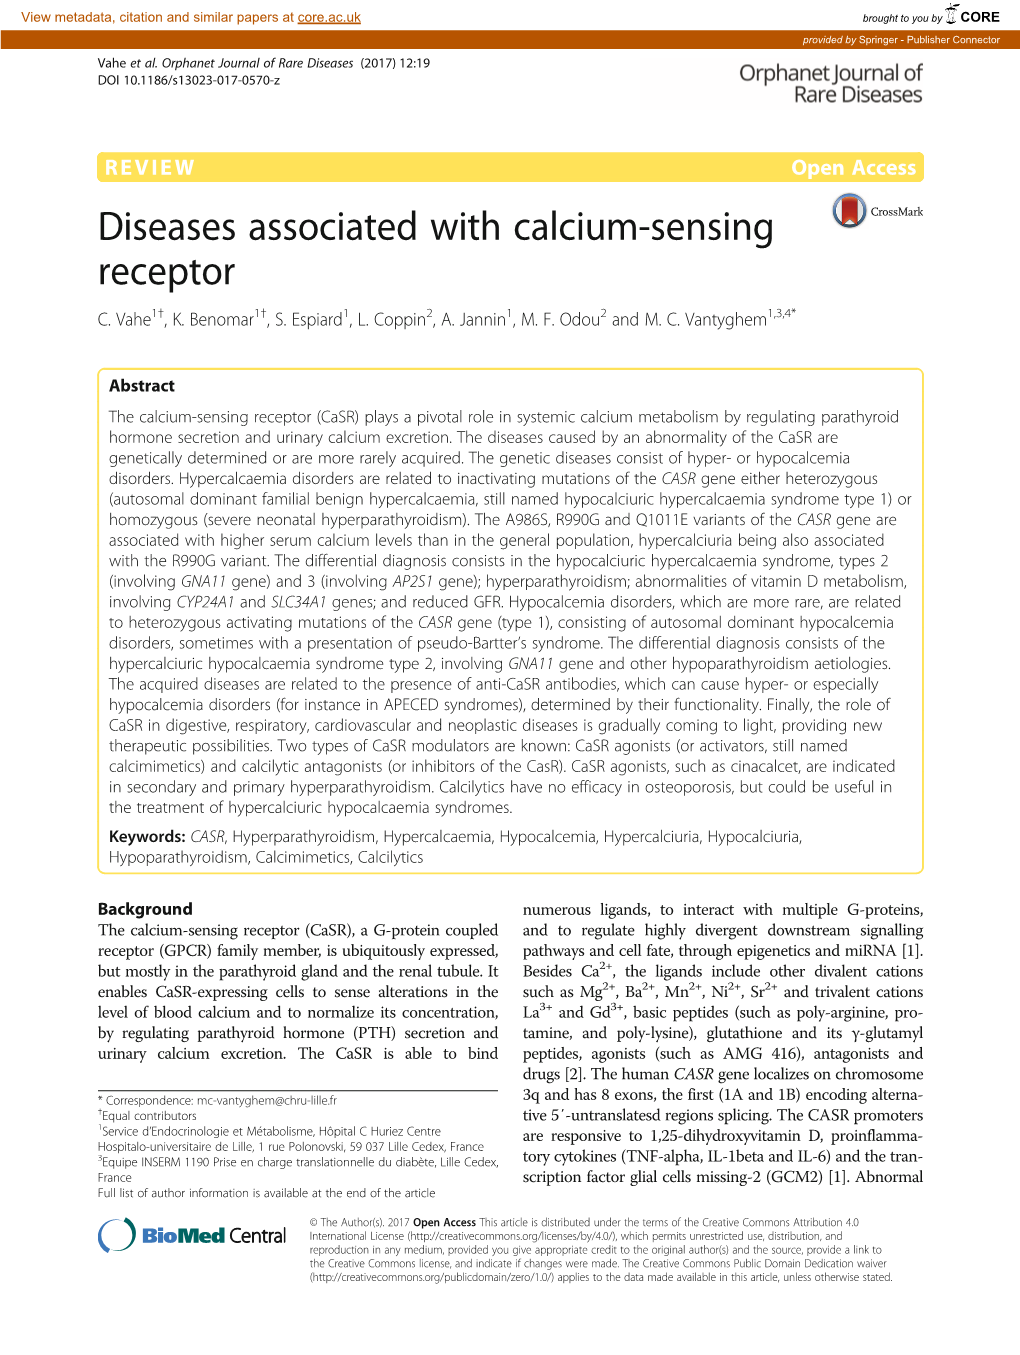 Diseases Associated with Calcium-Sensing Receptor C